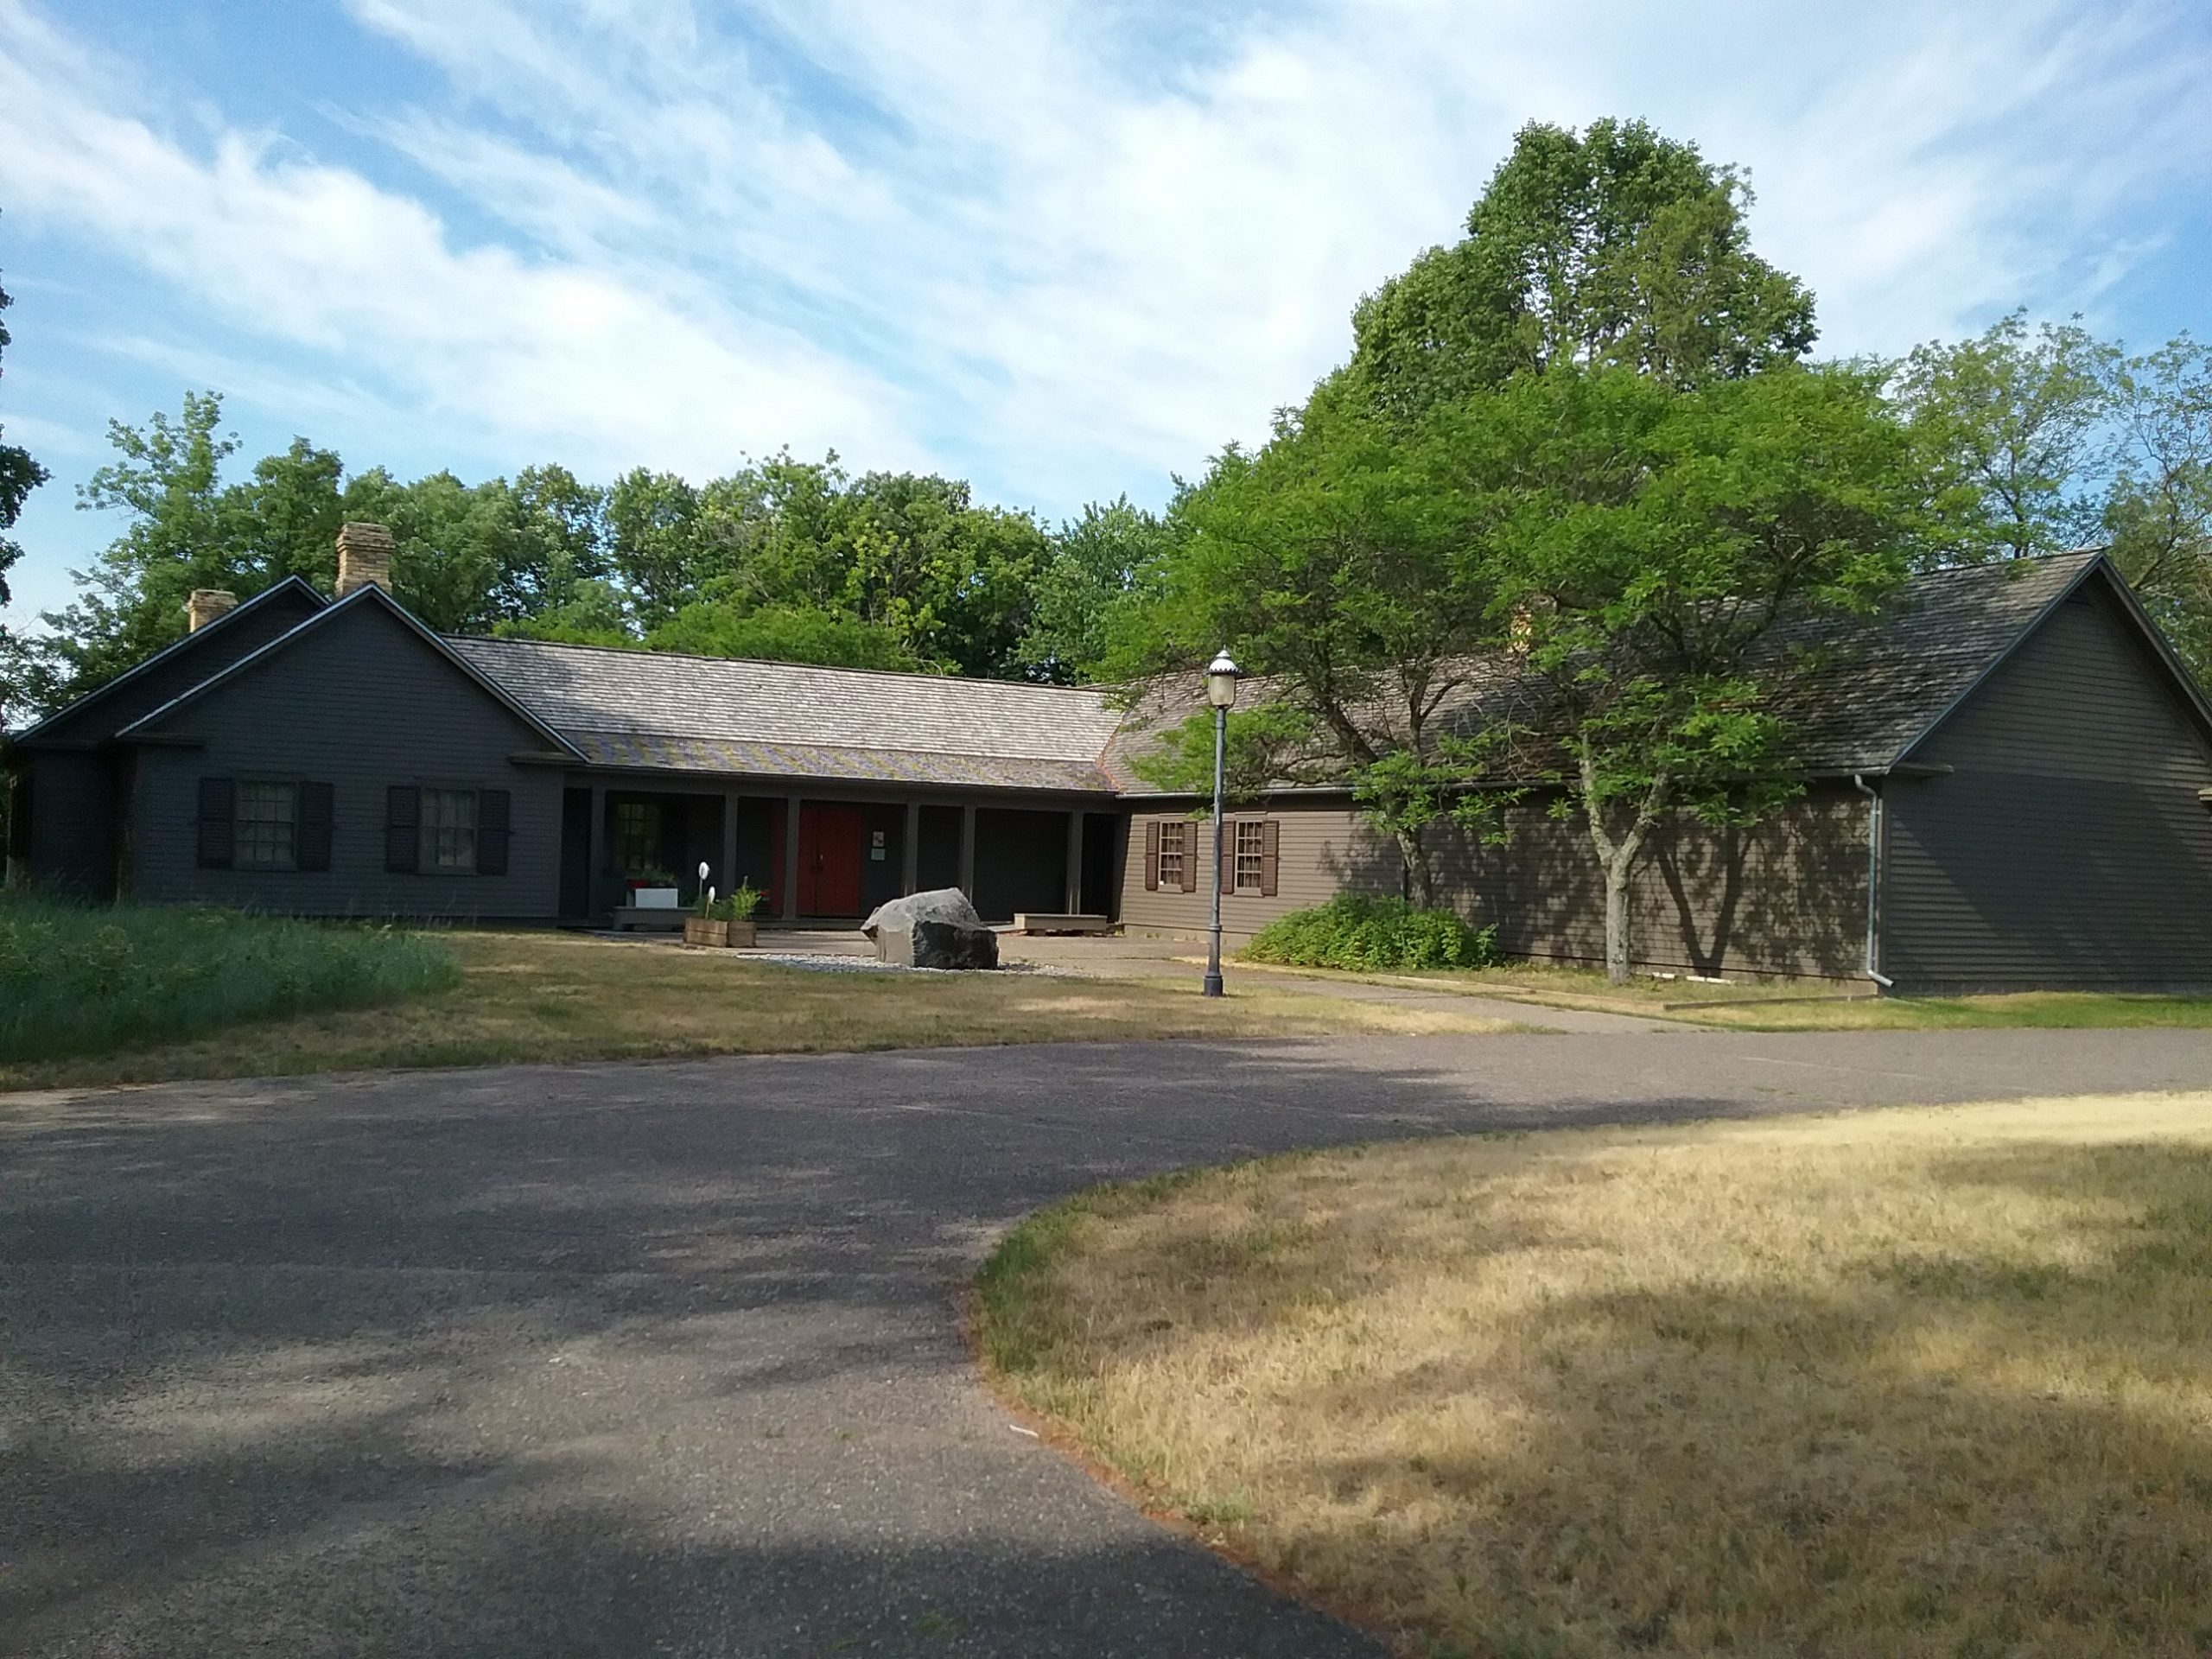 The Charles A. Weyerhaeuser Memorial Museum, Little Falls, MN, June 24, 2021.